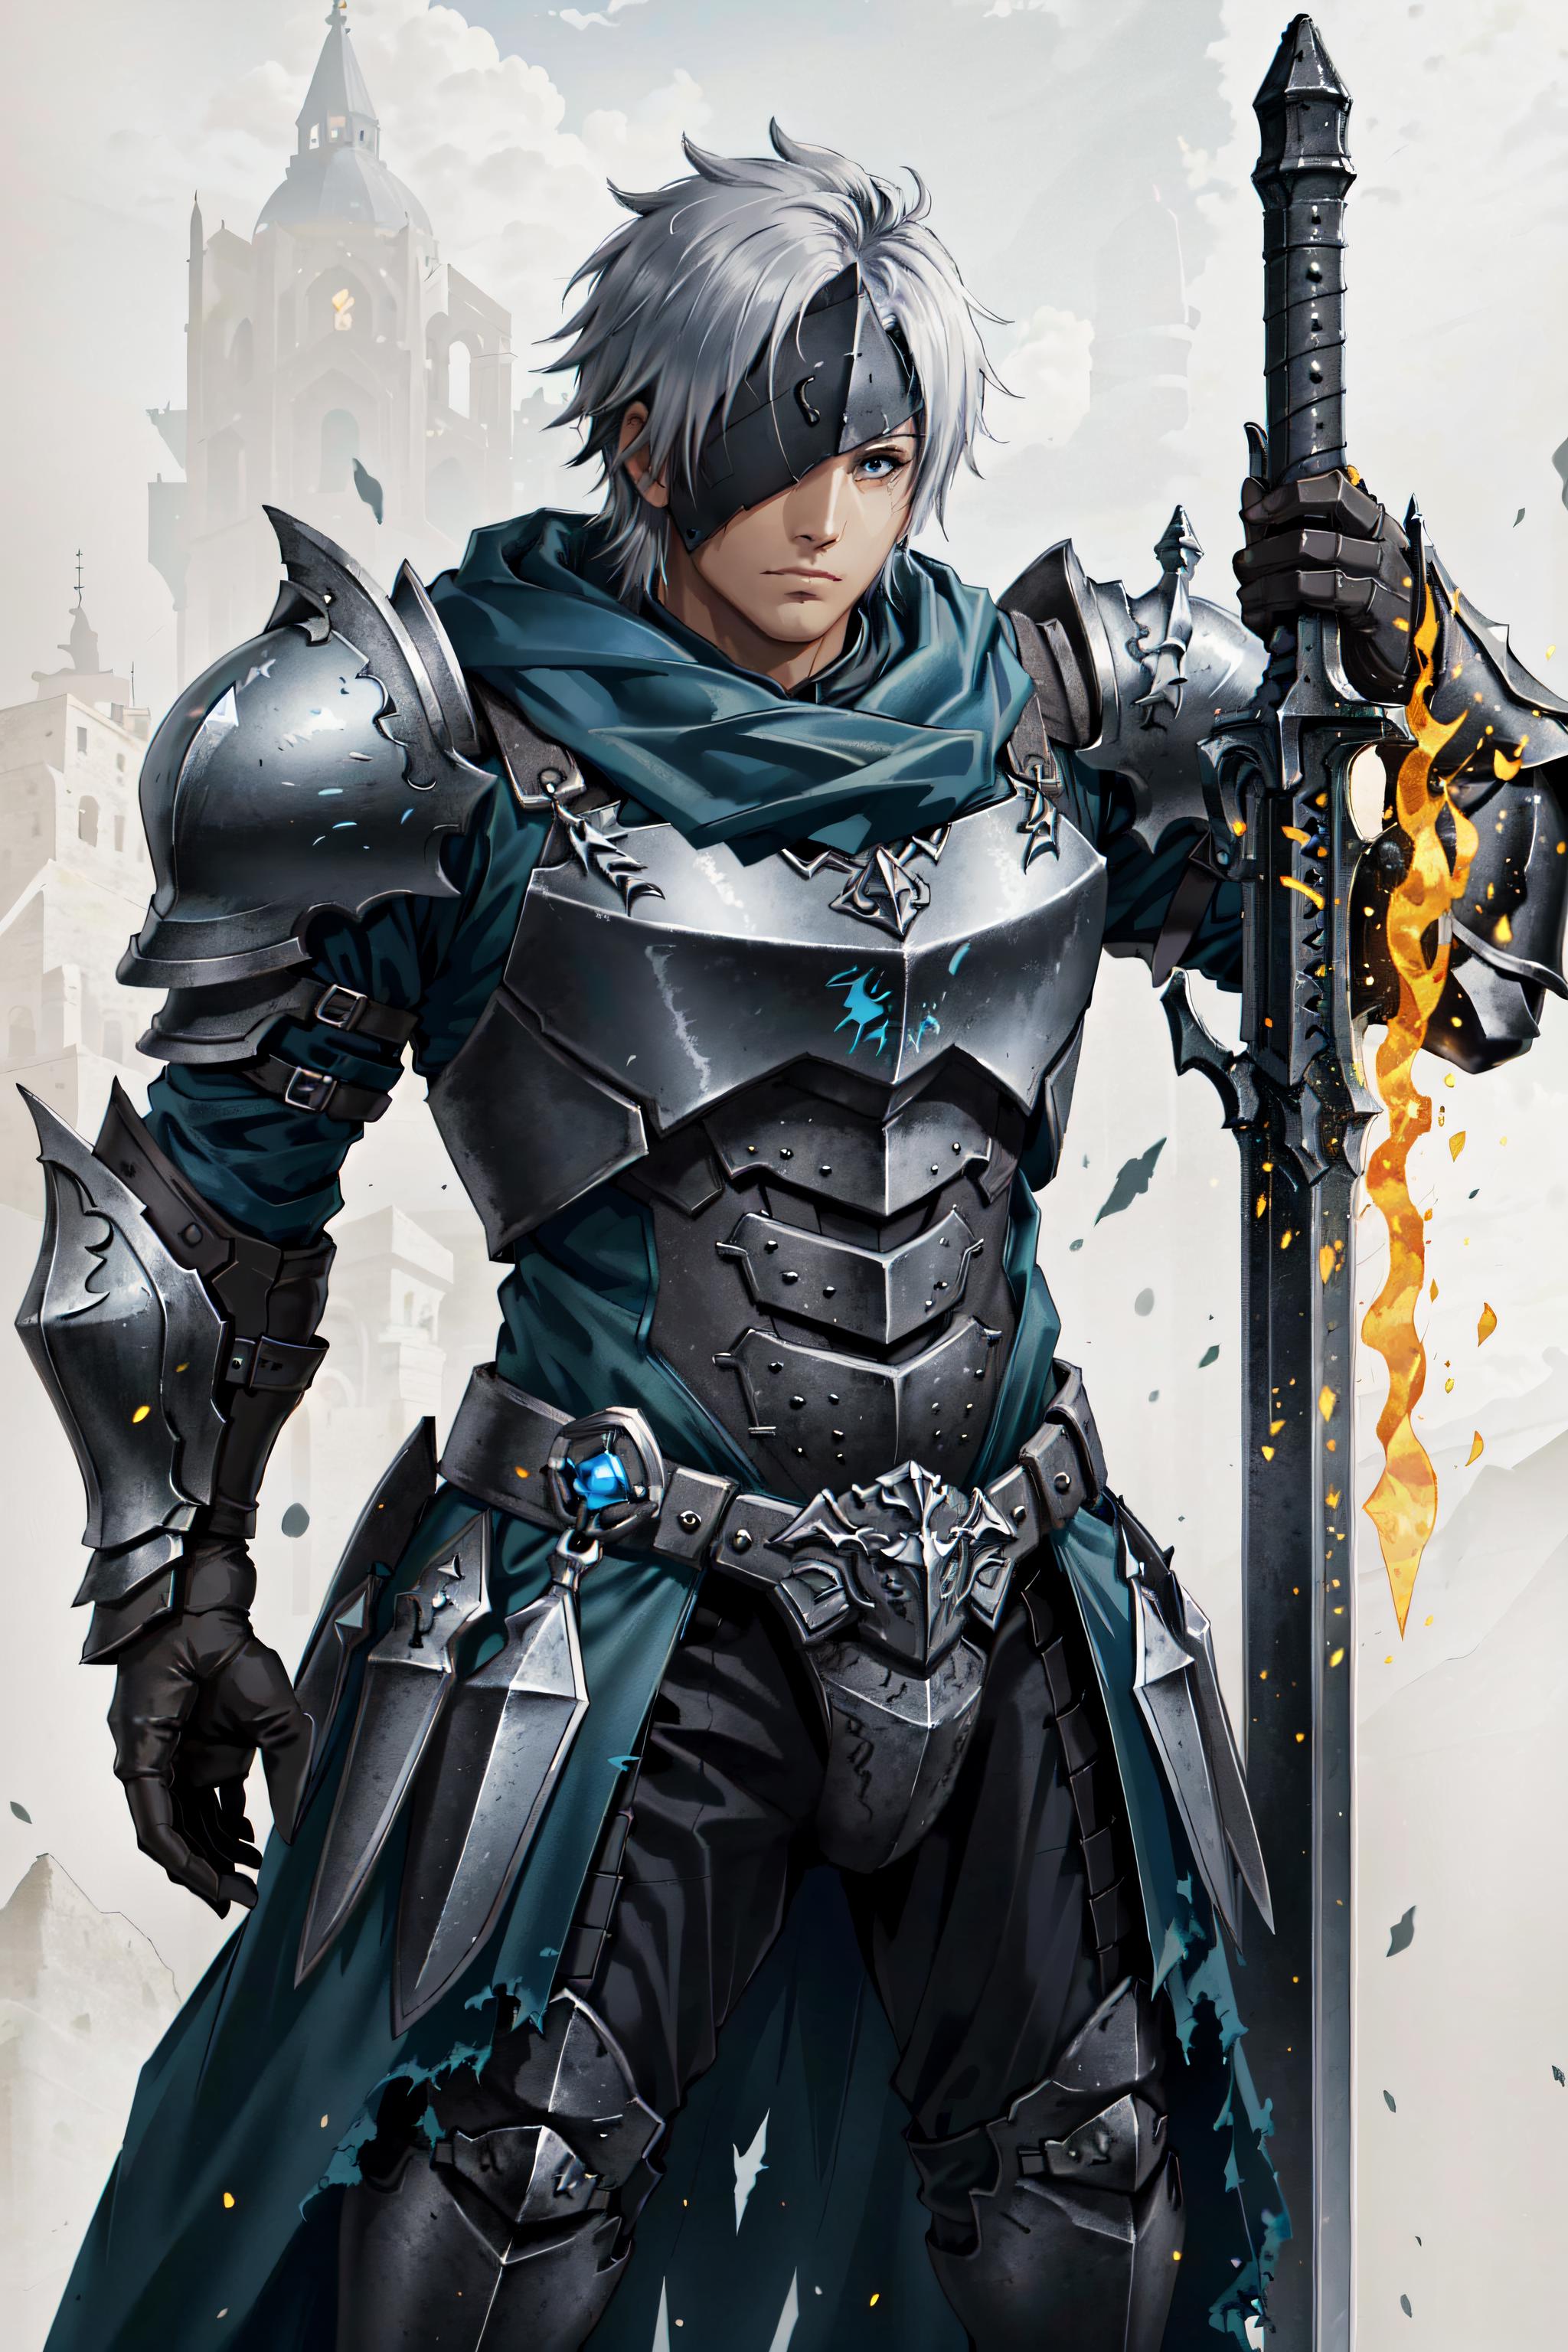 Adopt Male Knight (OPEN) by DiegoBear on DeviantArt